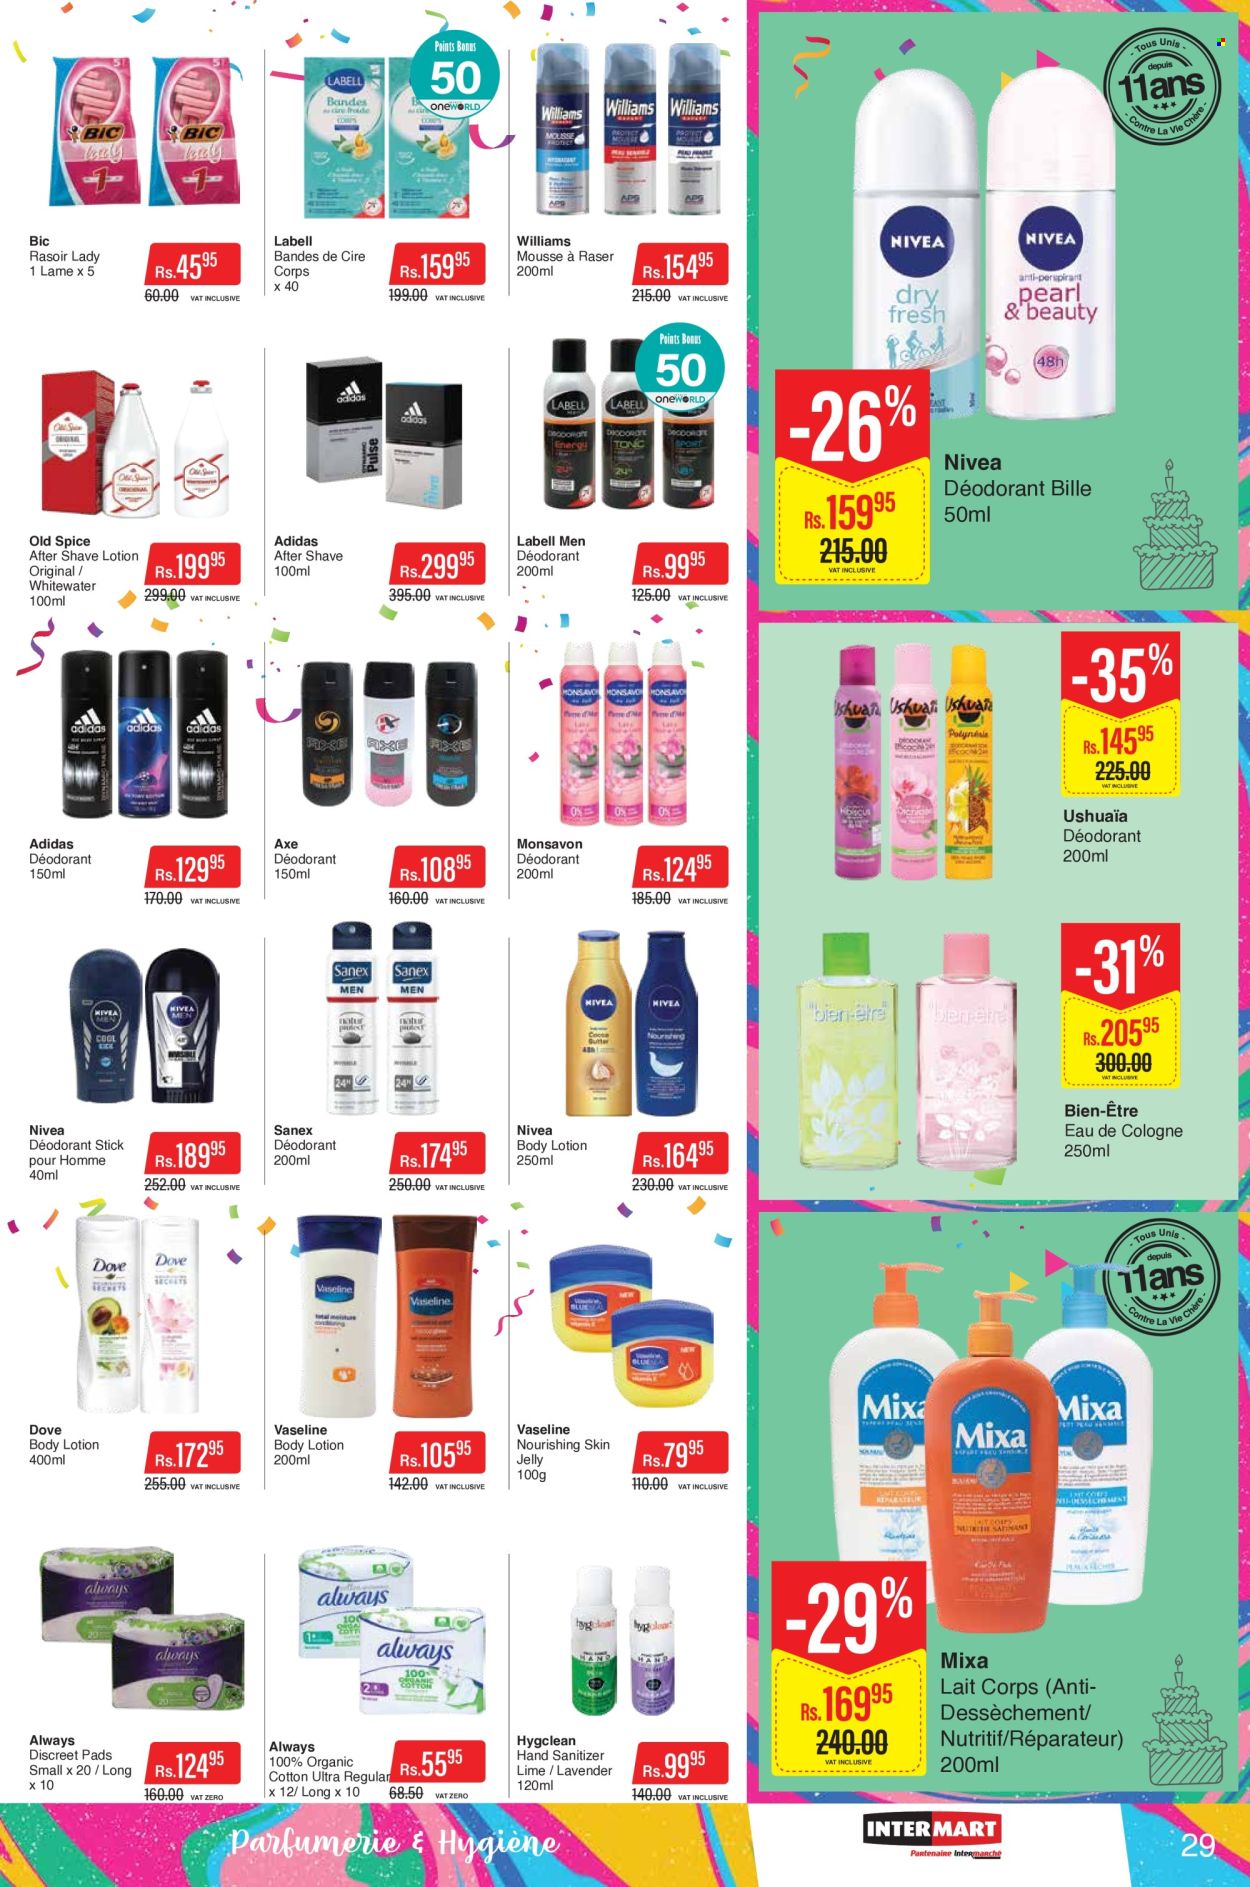 <magasin> - <du DD/MM/YYYY au DD/MM/YYYY> - Produits soldés - ,<products from flyers>. Page 29. 